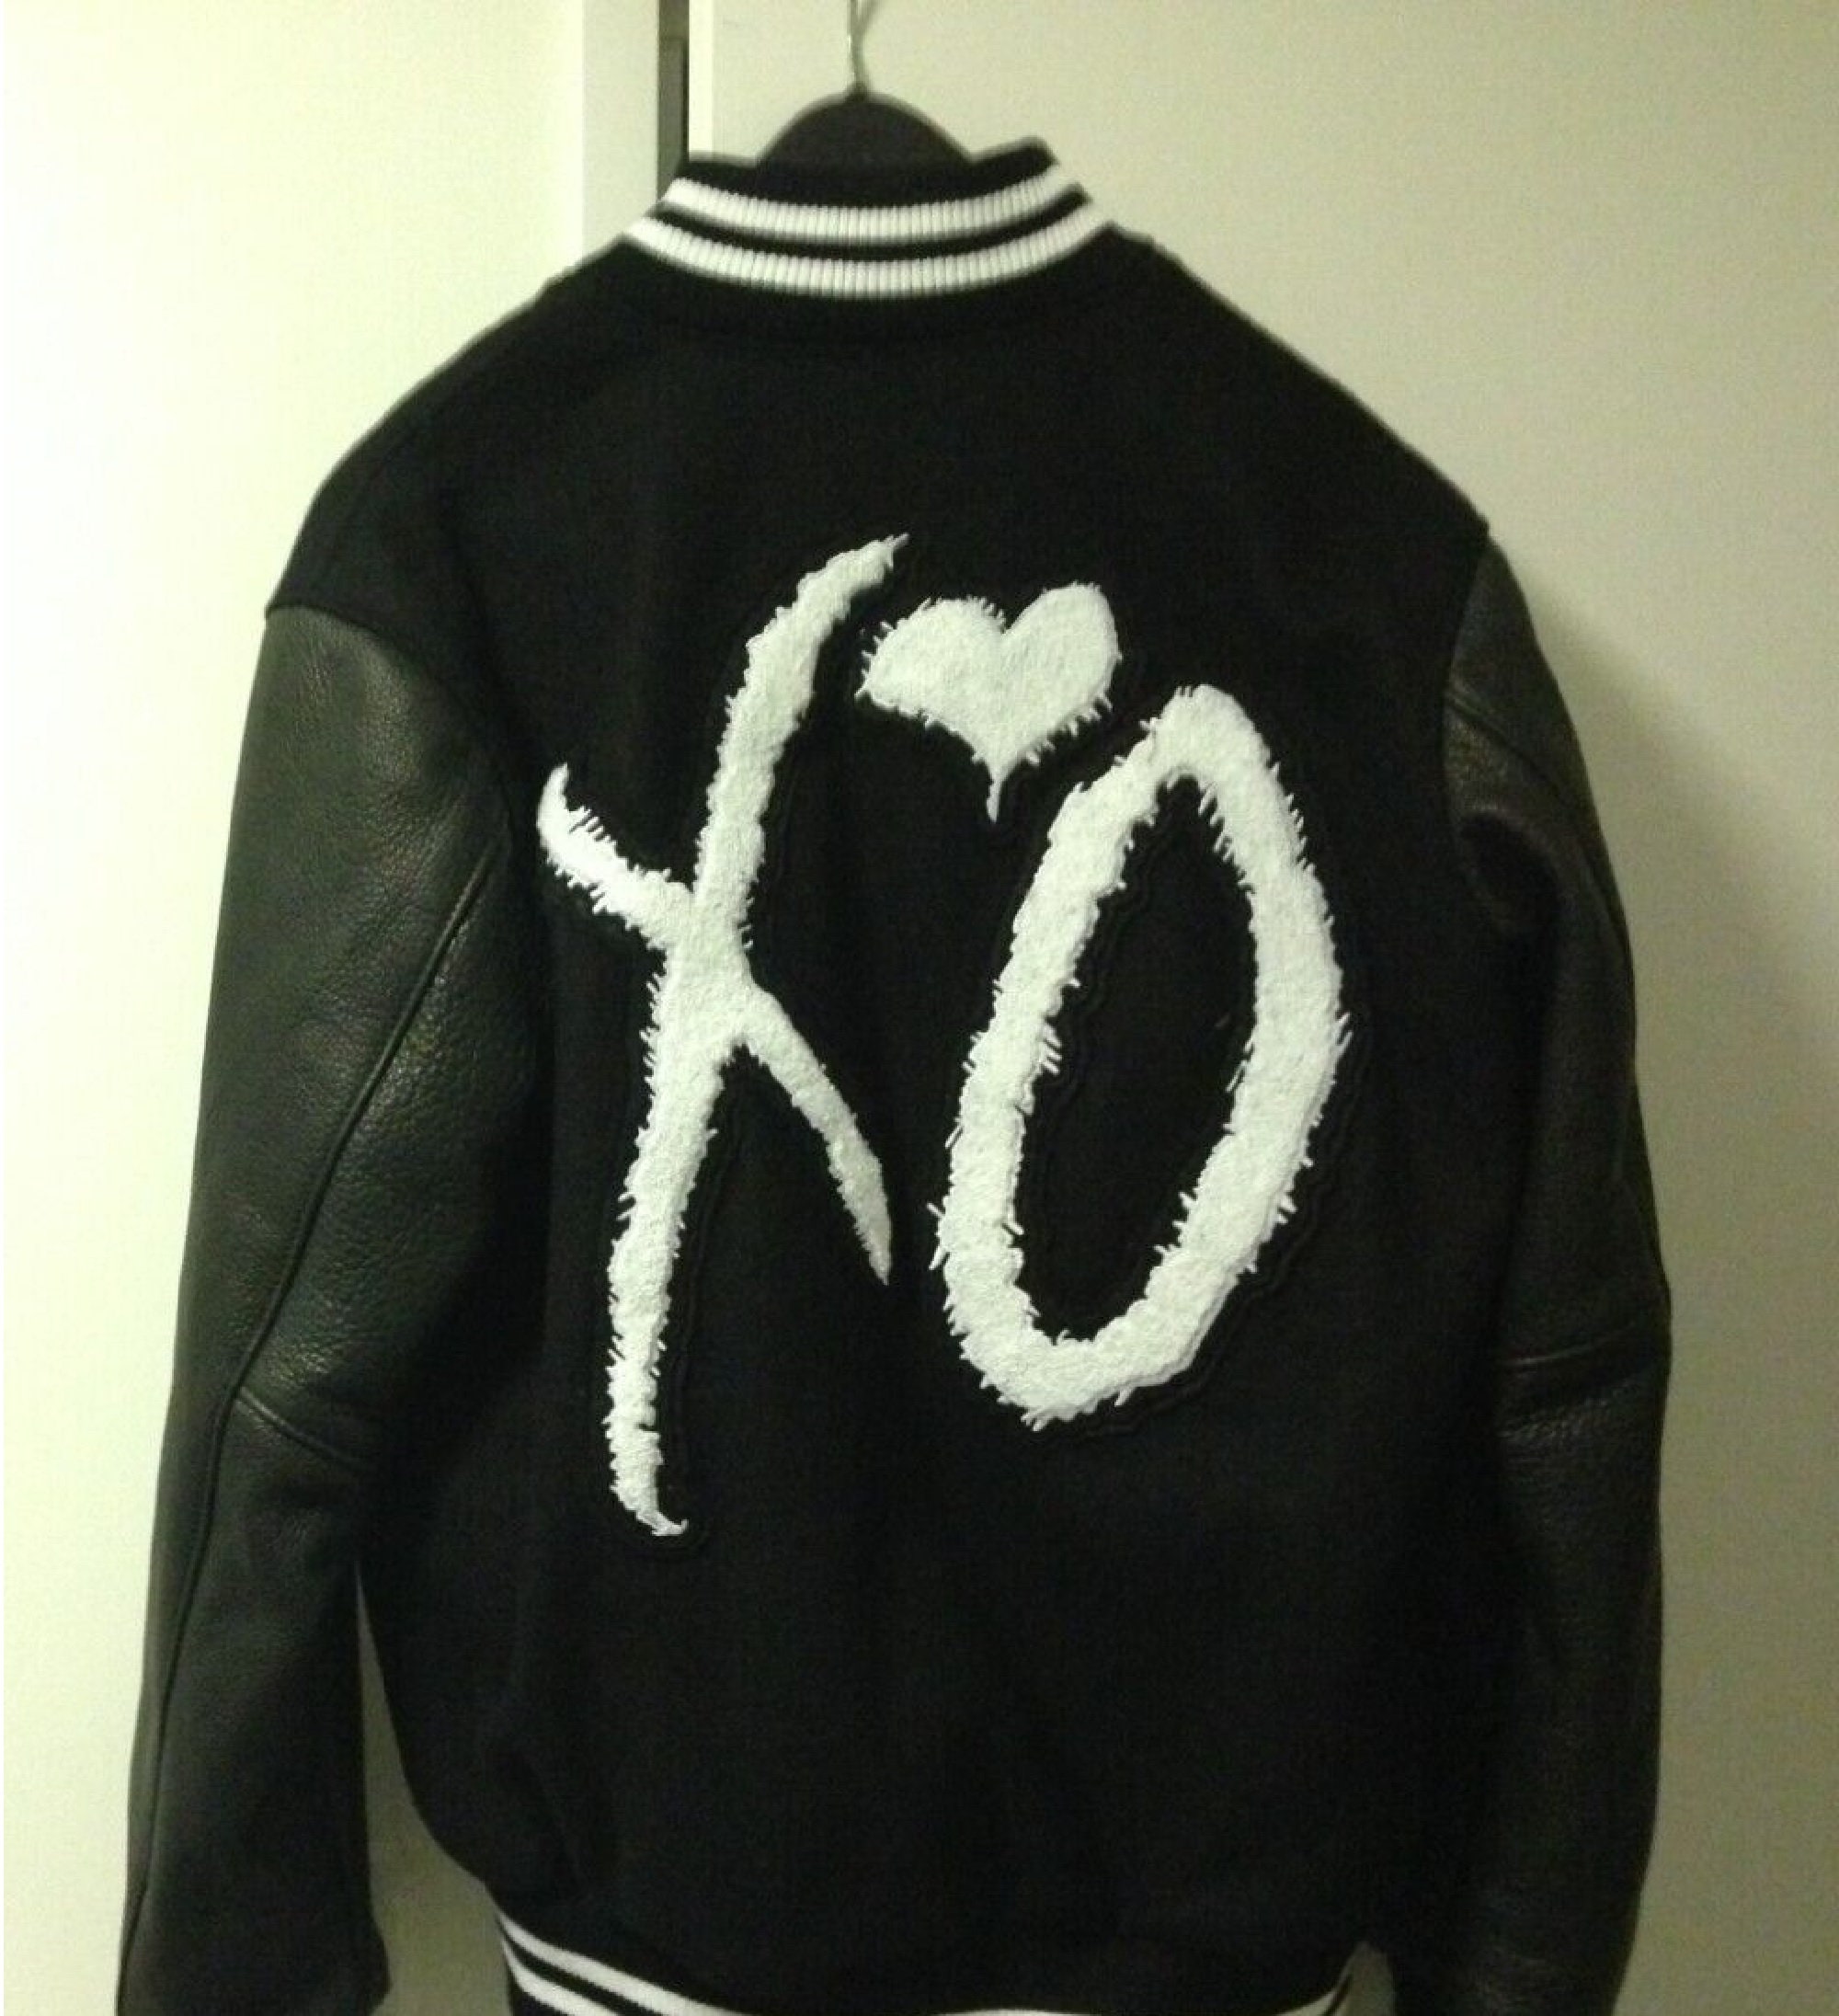 XO The Weeknd Super Bowl LV Varsity Wool Jacket